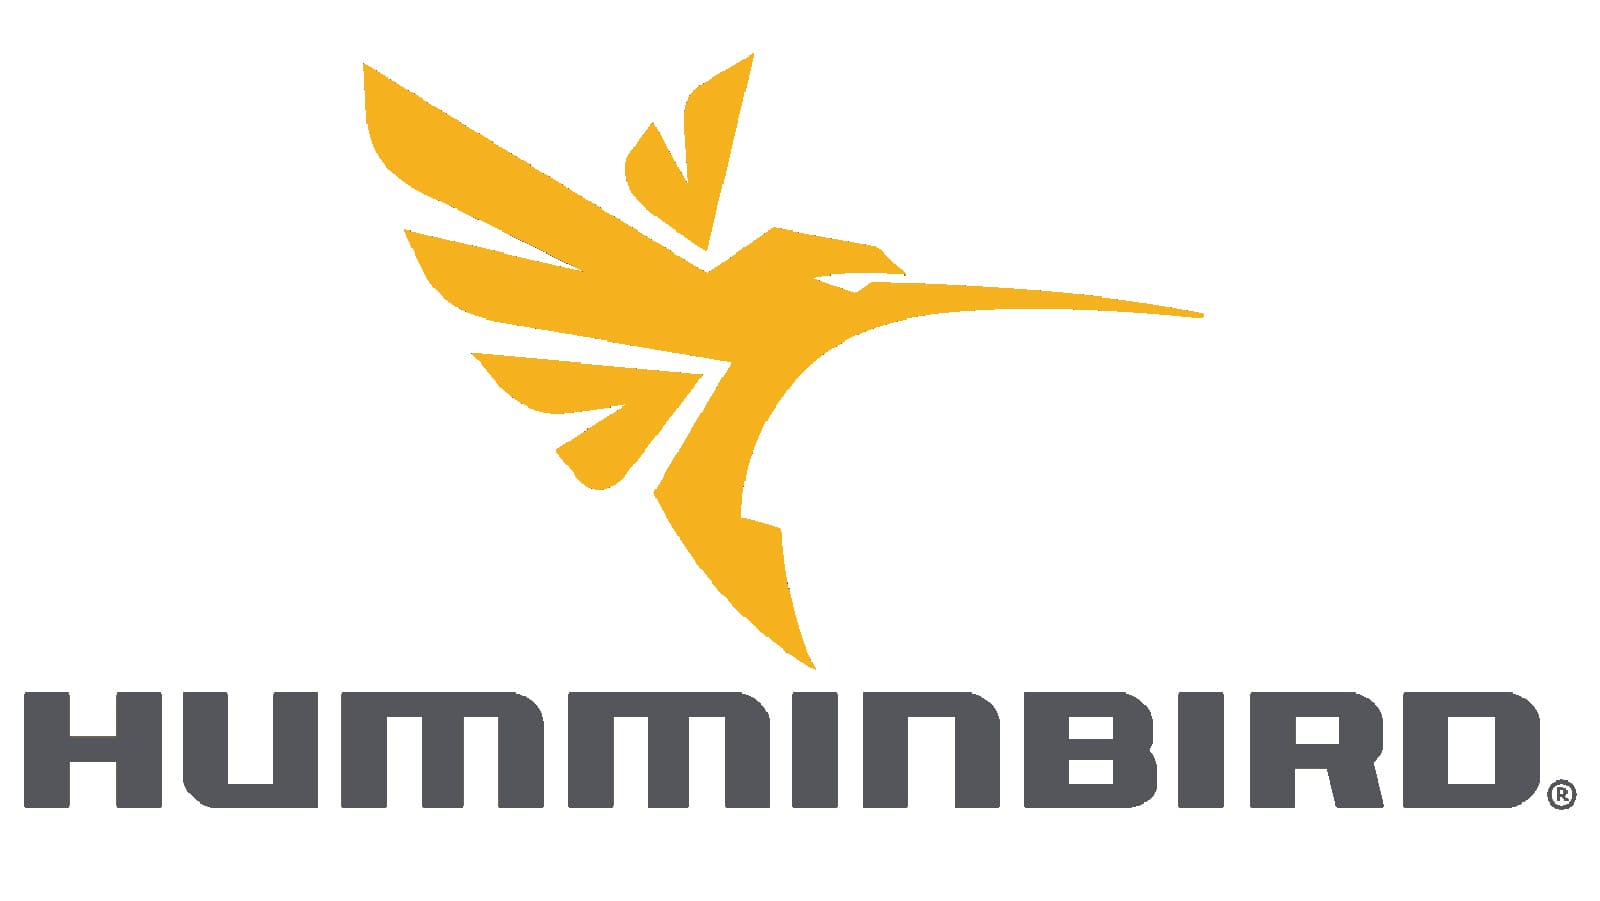 humminbird_logo